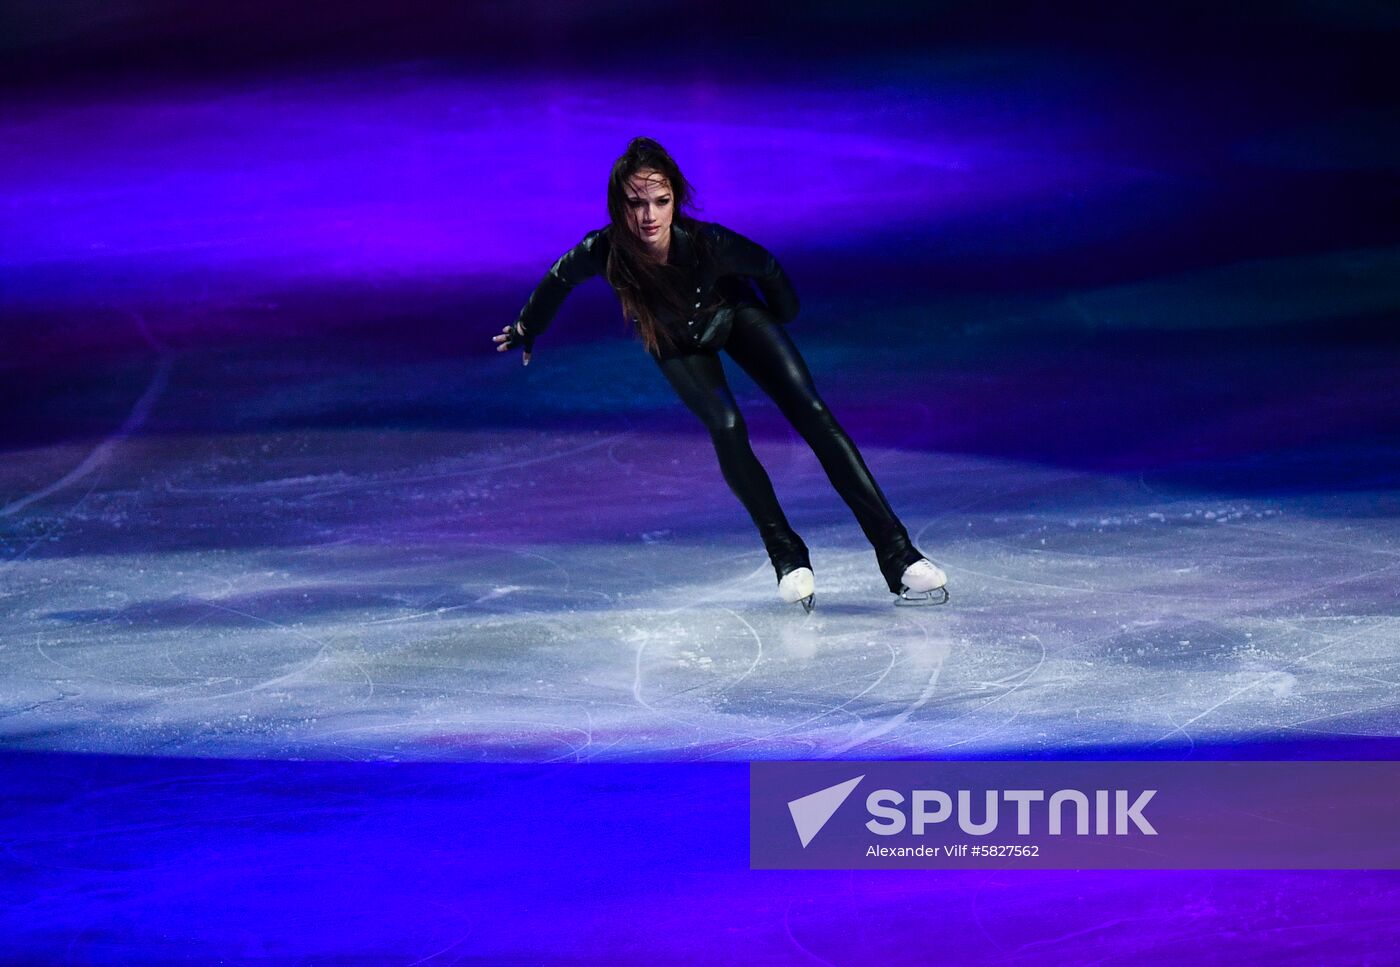 Japan Figure Skating Worlds Gala Exhibition